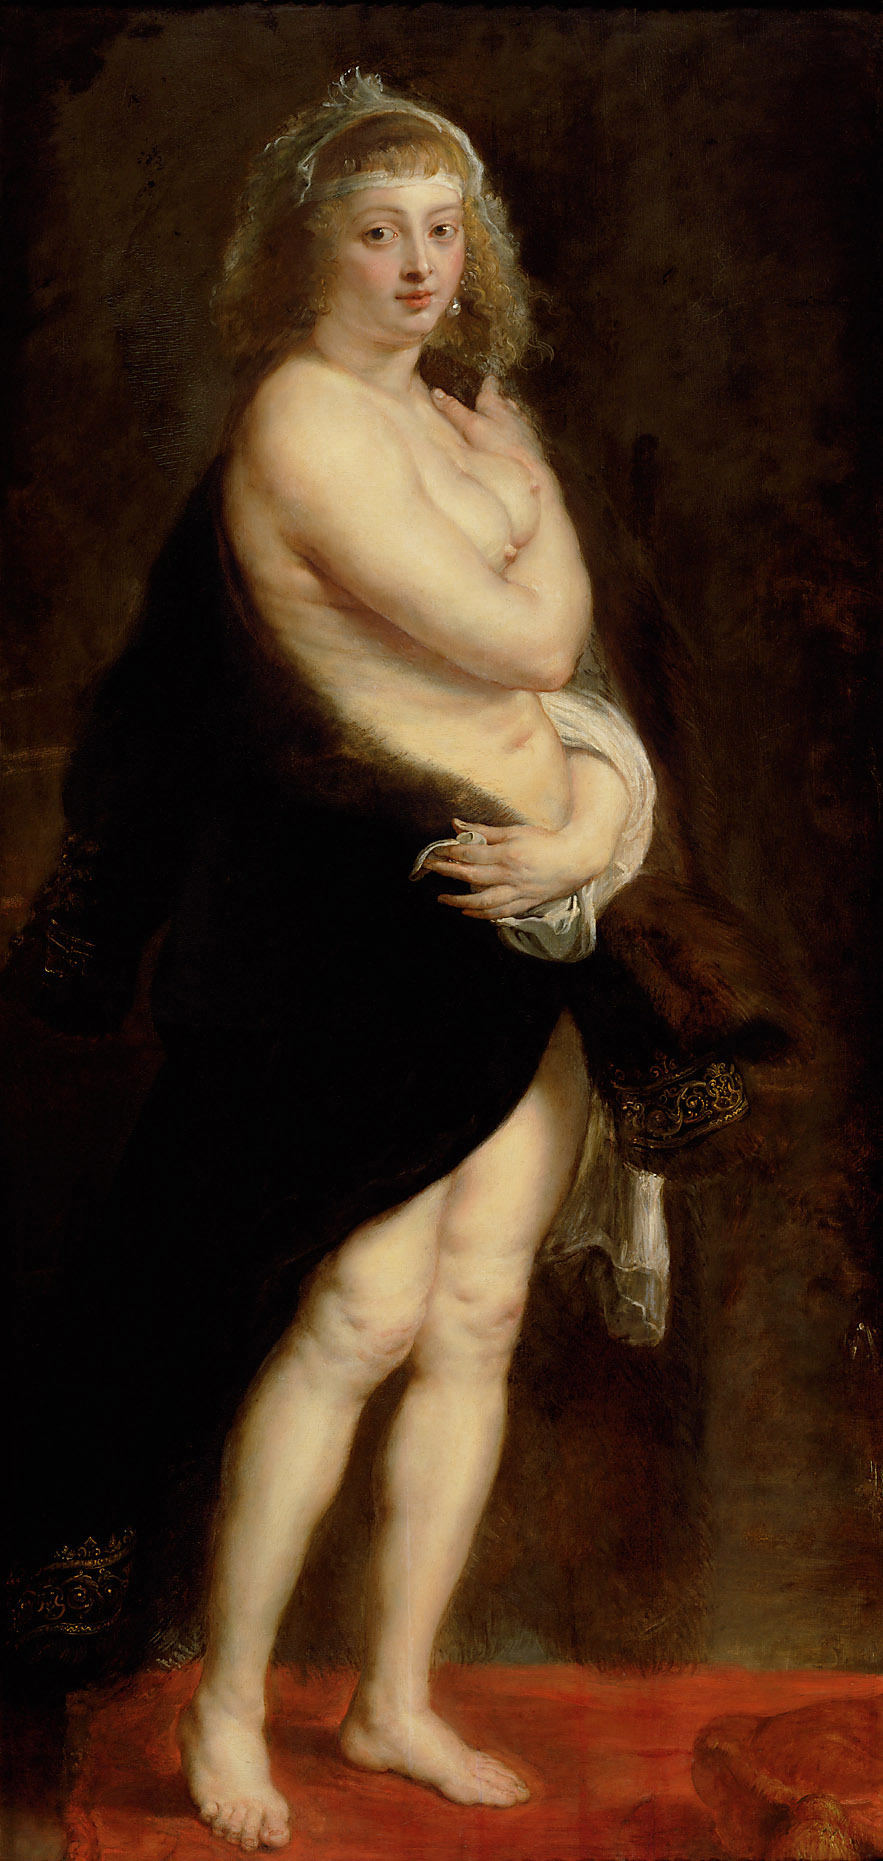 Hélène Fourment ("Het Bont") by Peter Paul Rubens - Around 1636/1638 - 176 x 83 cm Kunsthistorisches Museum